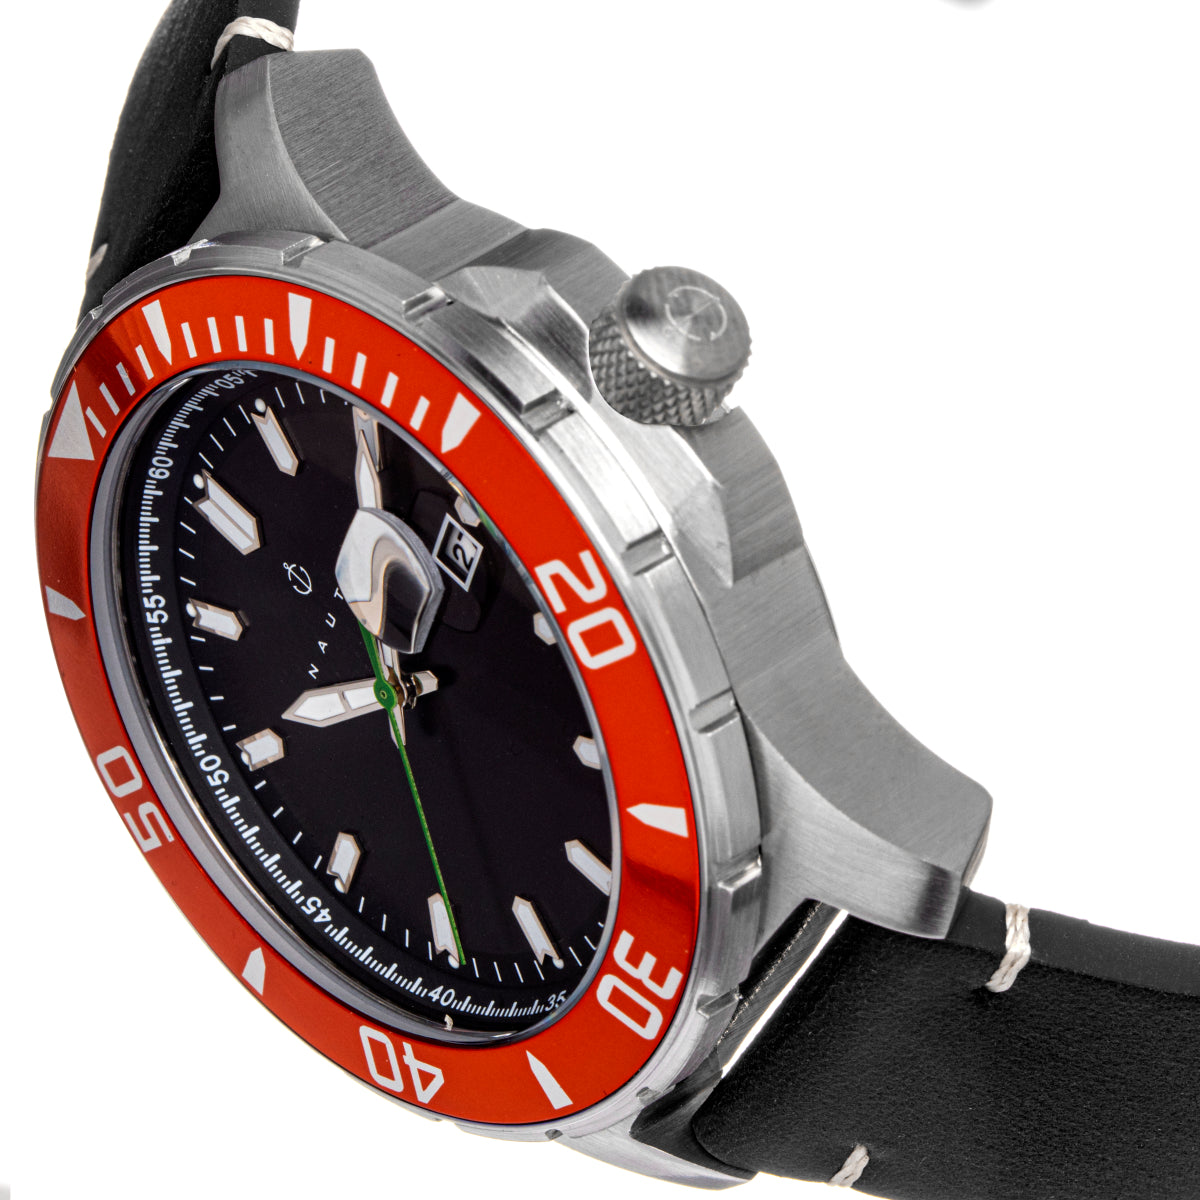 Nautis Dive Pro 200 Leather-Band Watch w/Date - Orange/Black - GL1909-H